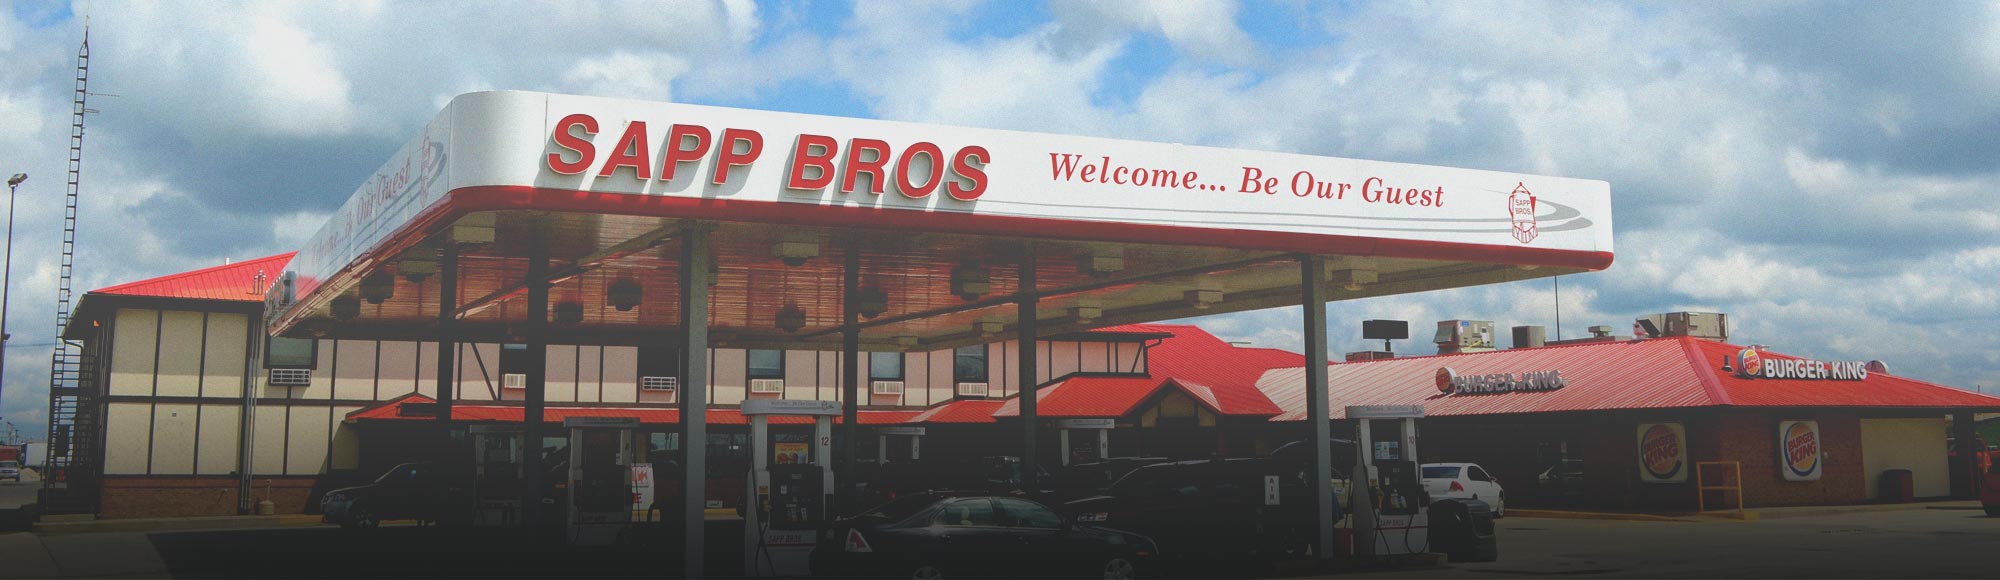 Sapp Bros. – Truck Stop, Truck & Trailer repair as well as Tire repair provider